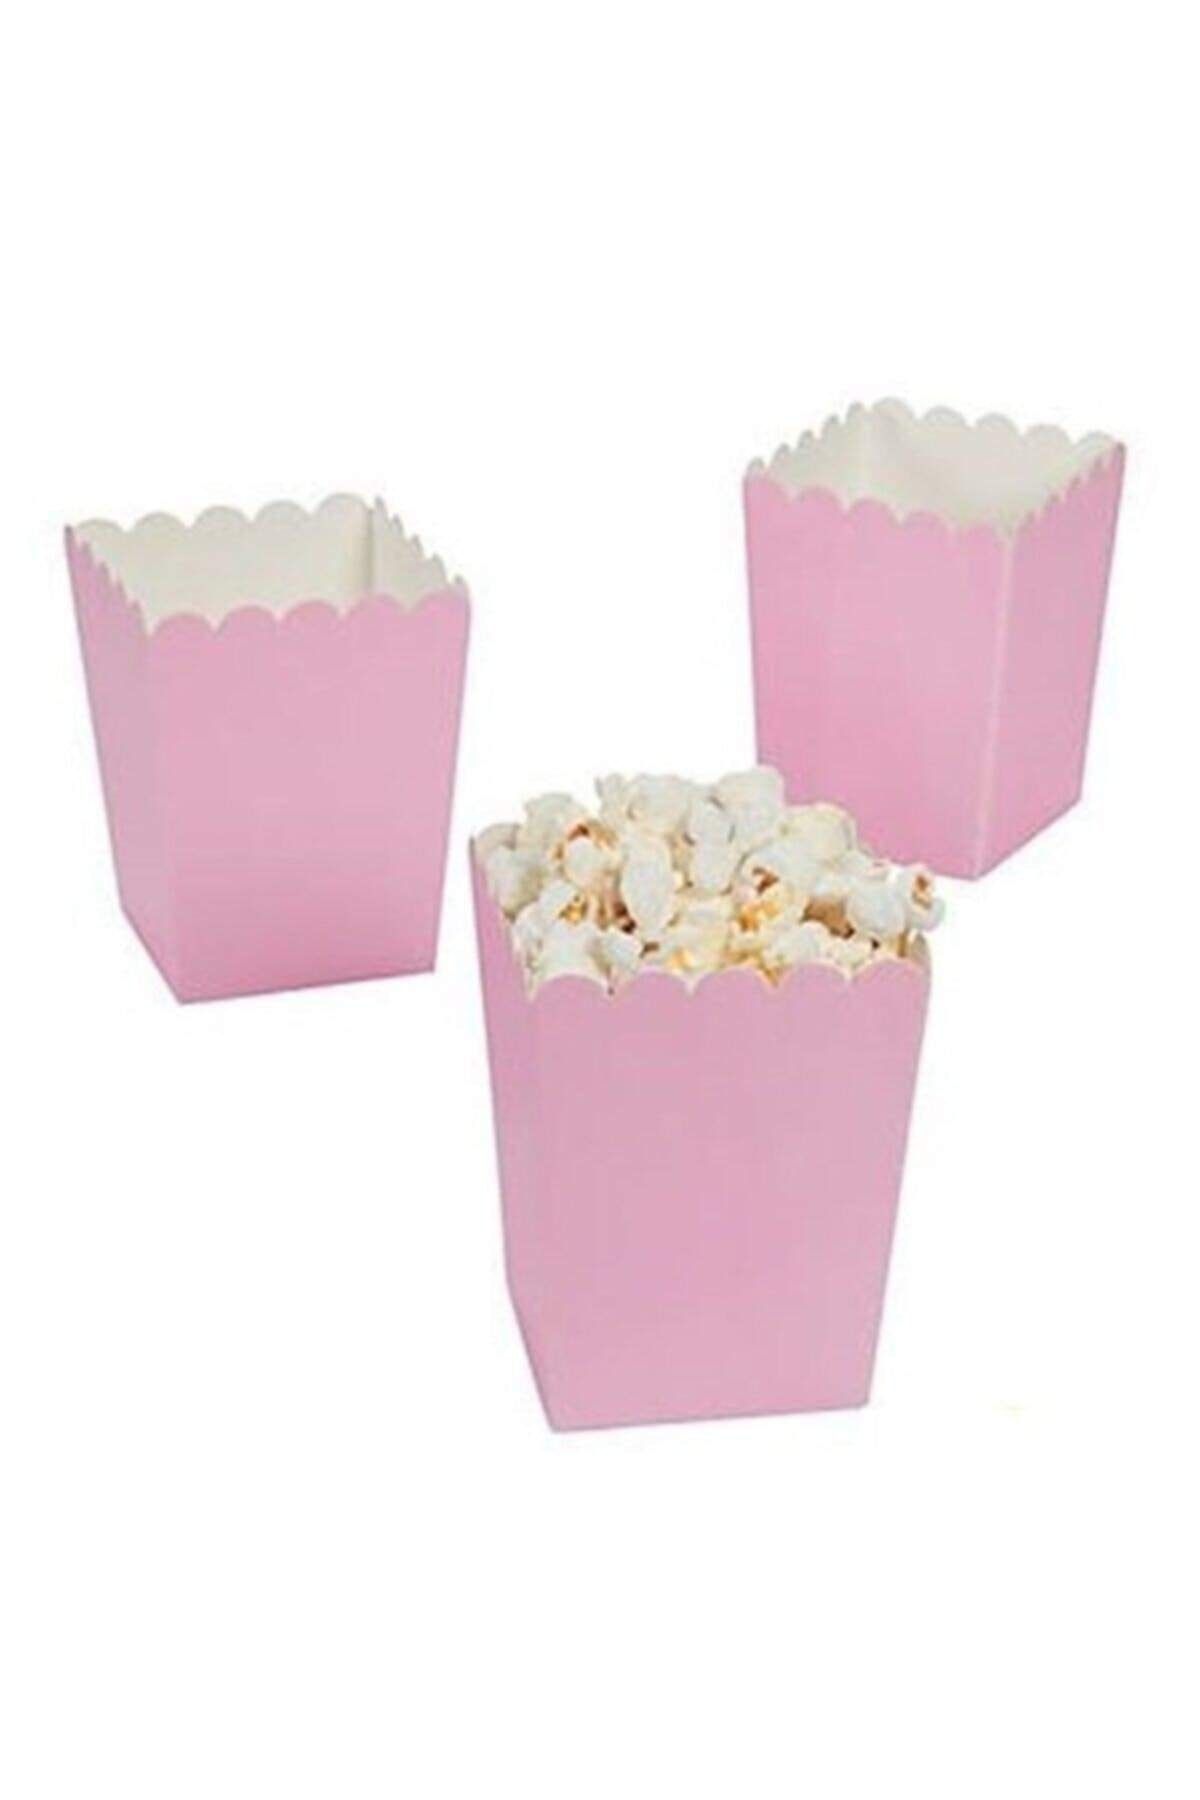 DENİZ Popcorn Kutusu ( Mısır , Cips Kutusu ) 8 Adet Pembe